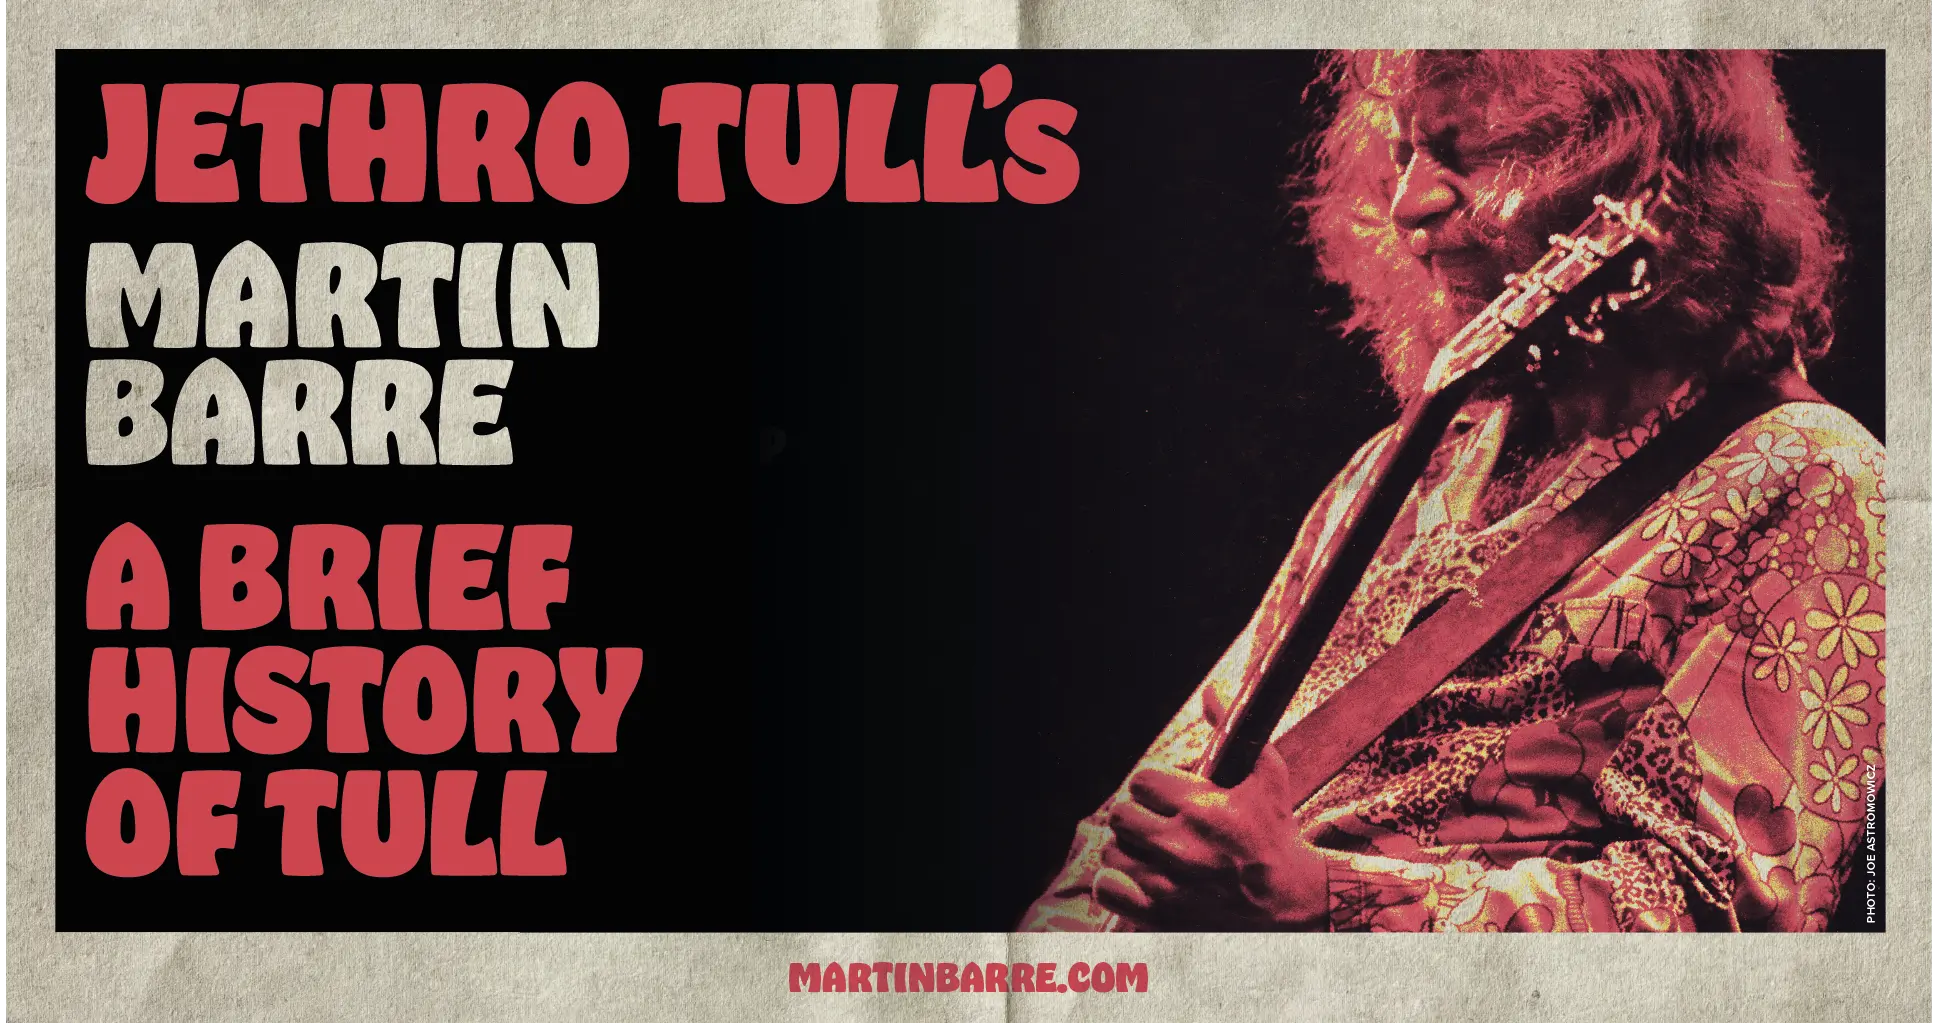 Celebrate The History of Jethro Tull Anniversary Tour